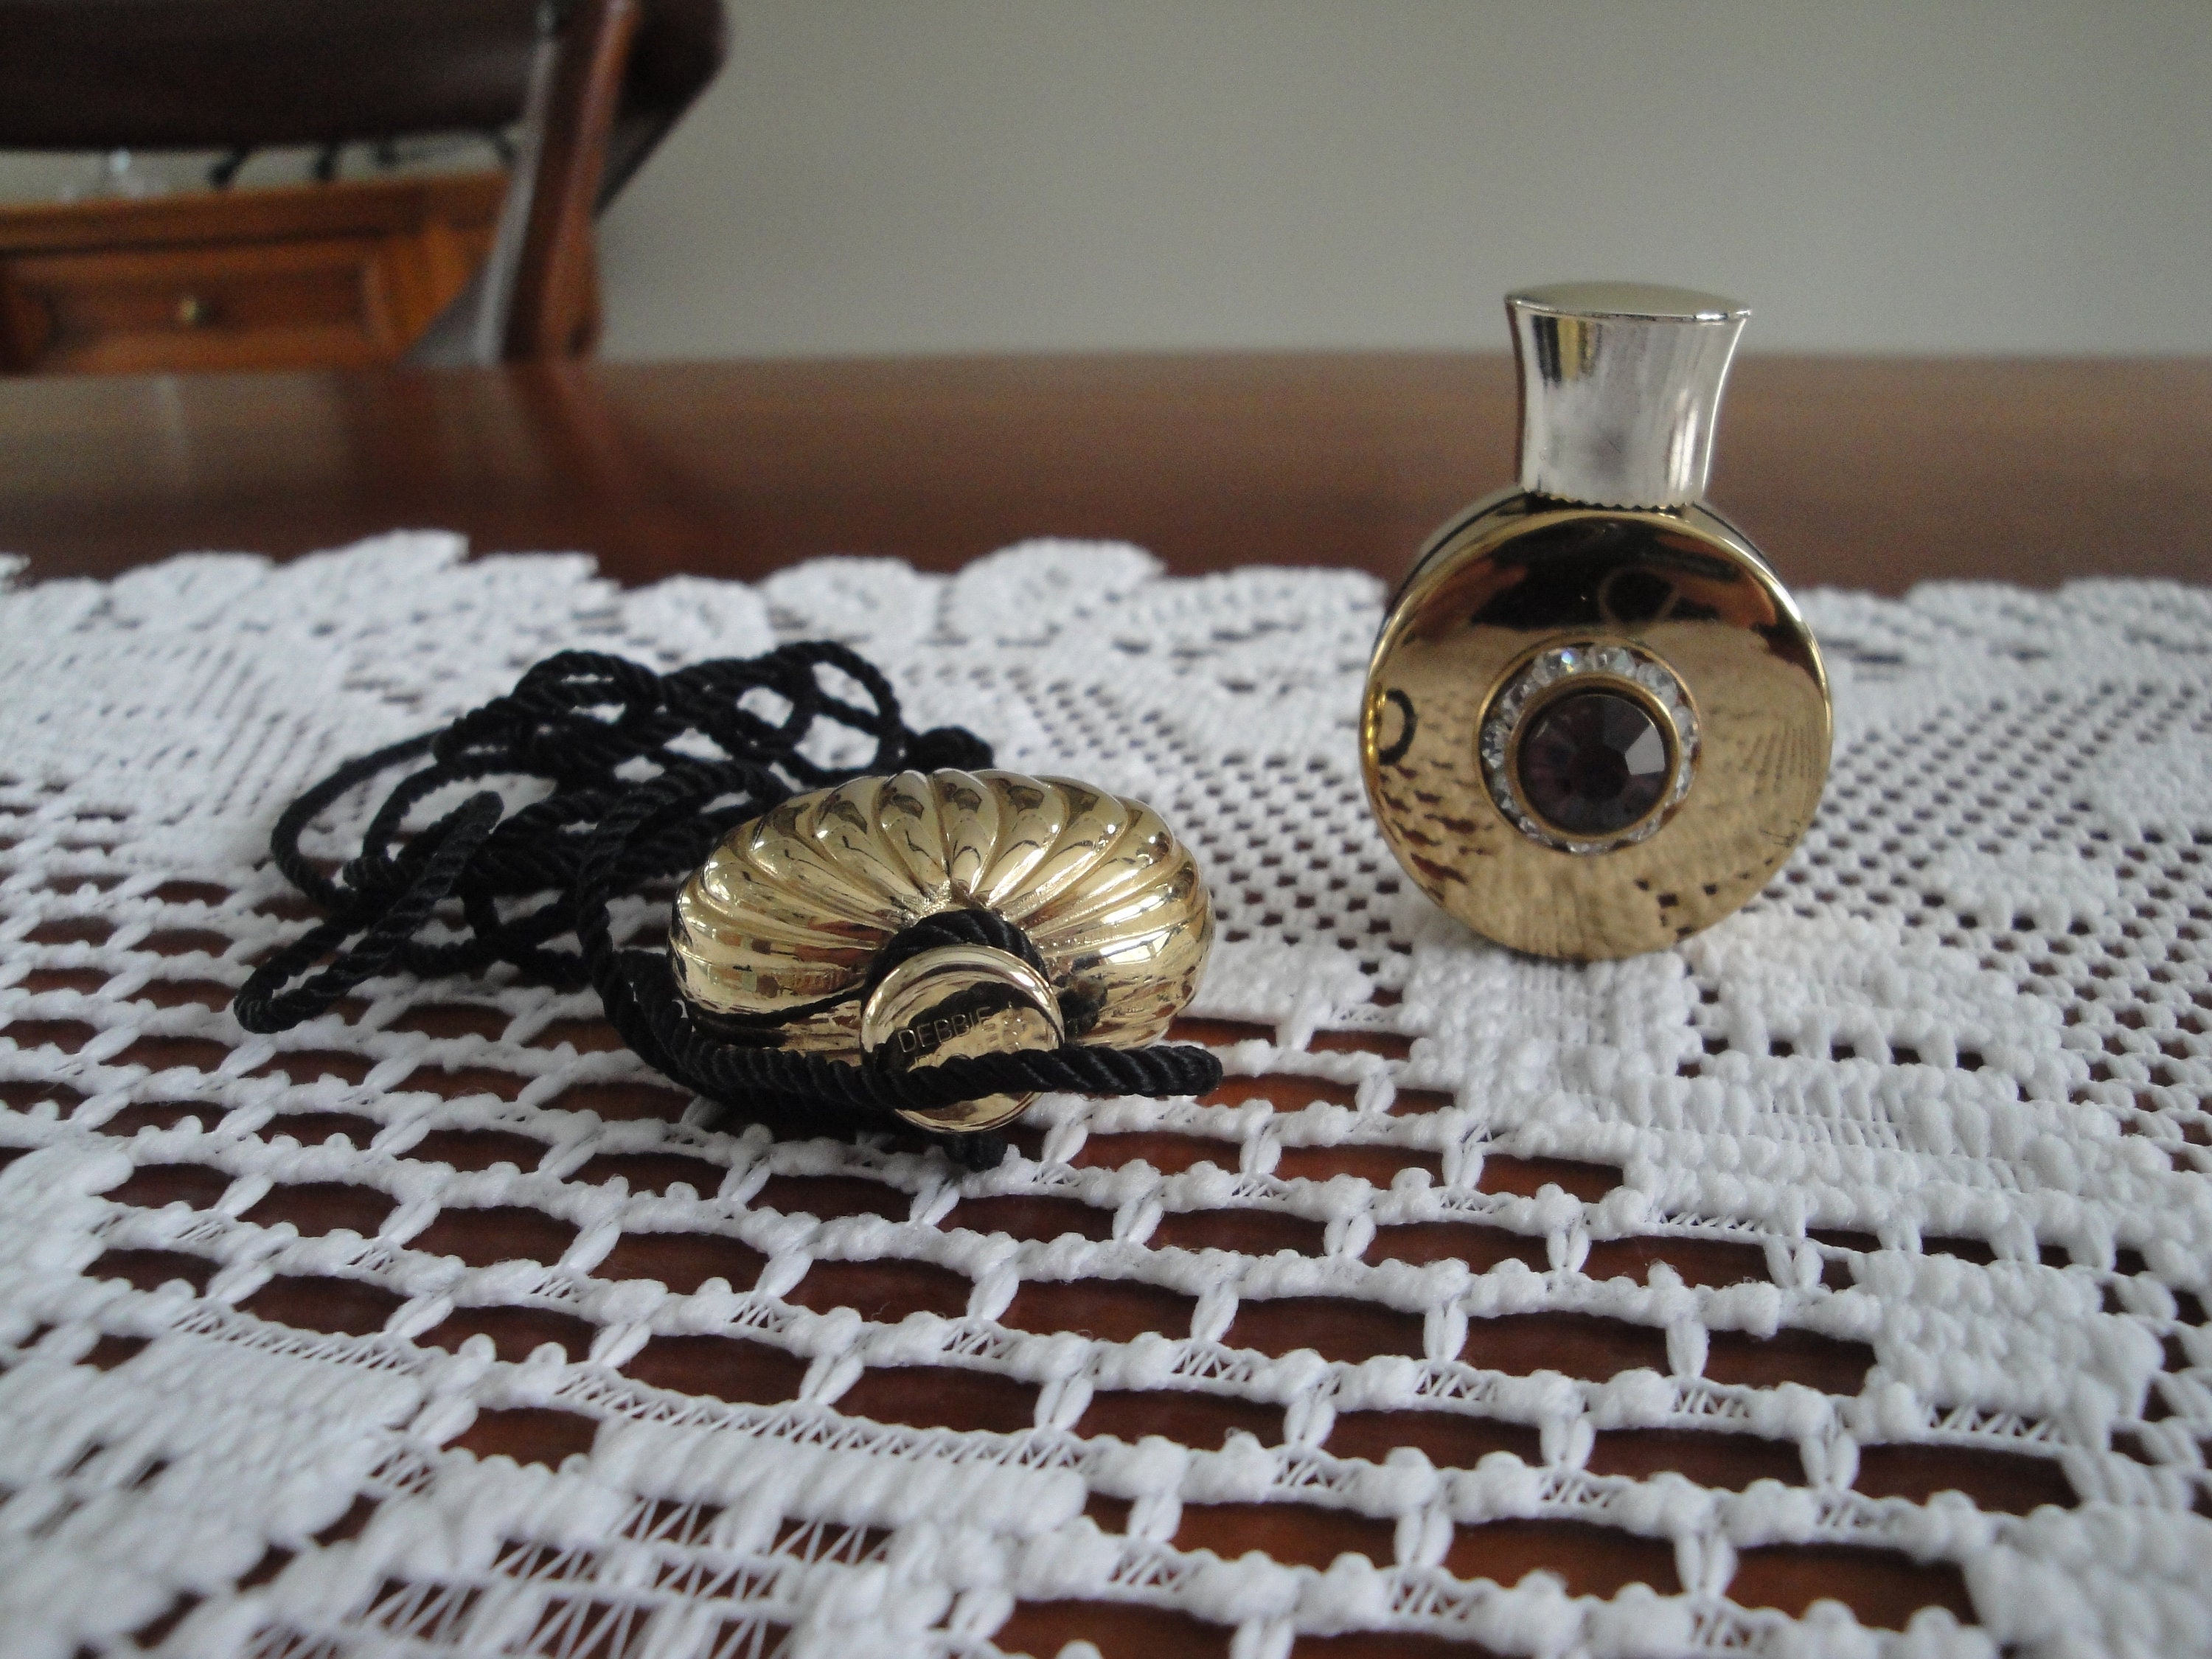 Gold Debbie J. Palmer Perfume Bottle Necklace Silky Black -  Finland